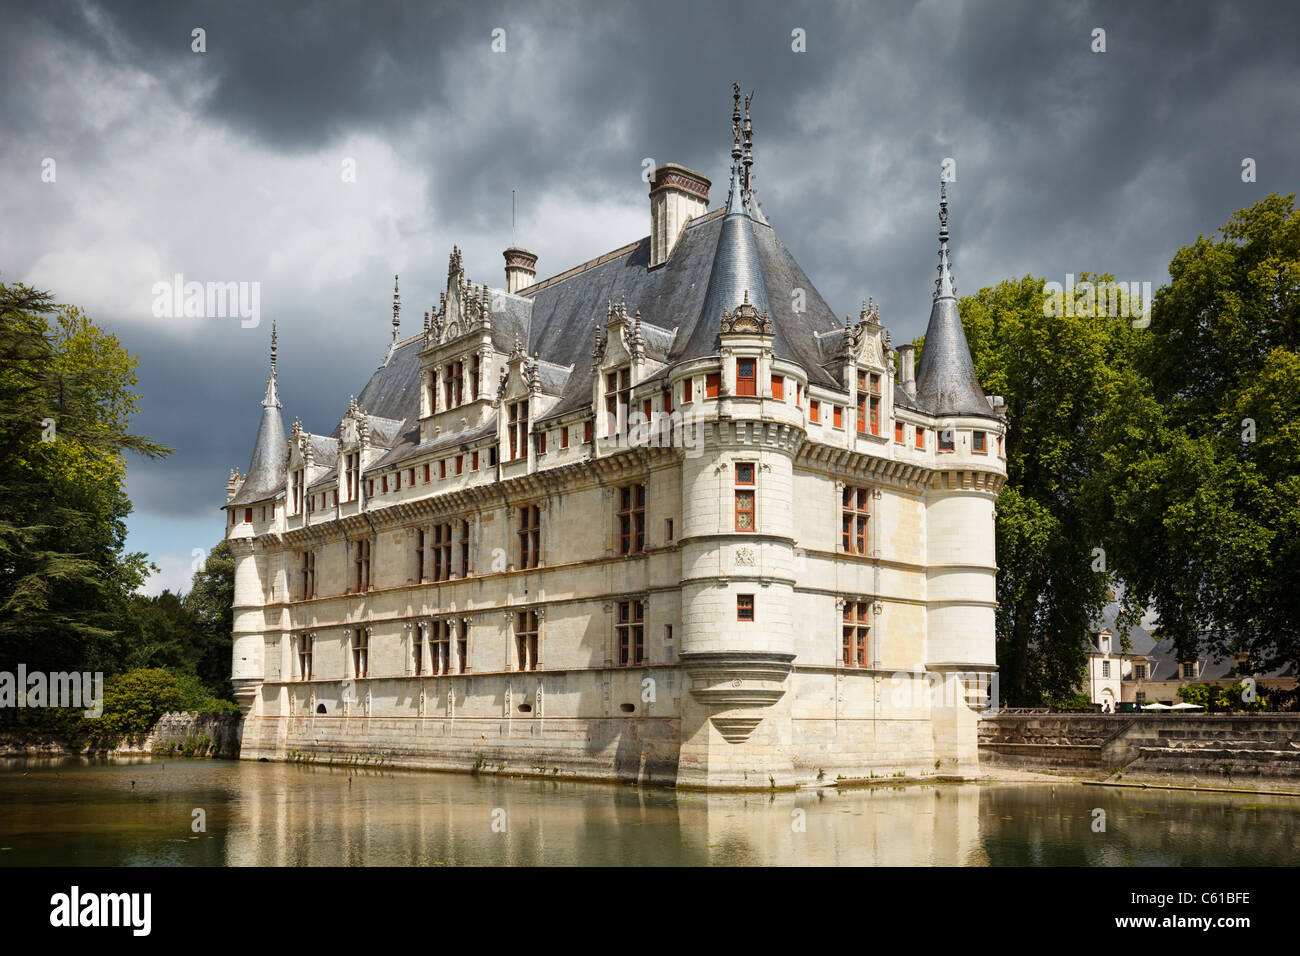 Französisches chateau, Azay-le-Rideau, einem typischen Loire Chateau, Indre et Loire, Loire Tal, Frankreich, Europa im Sommer Stockfoto